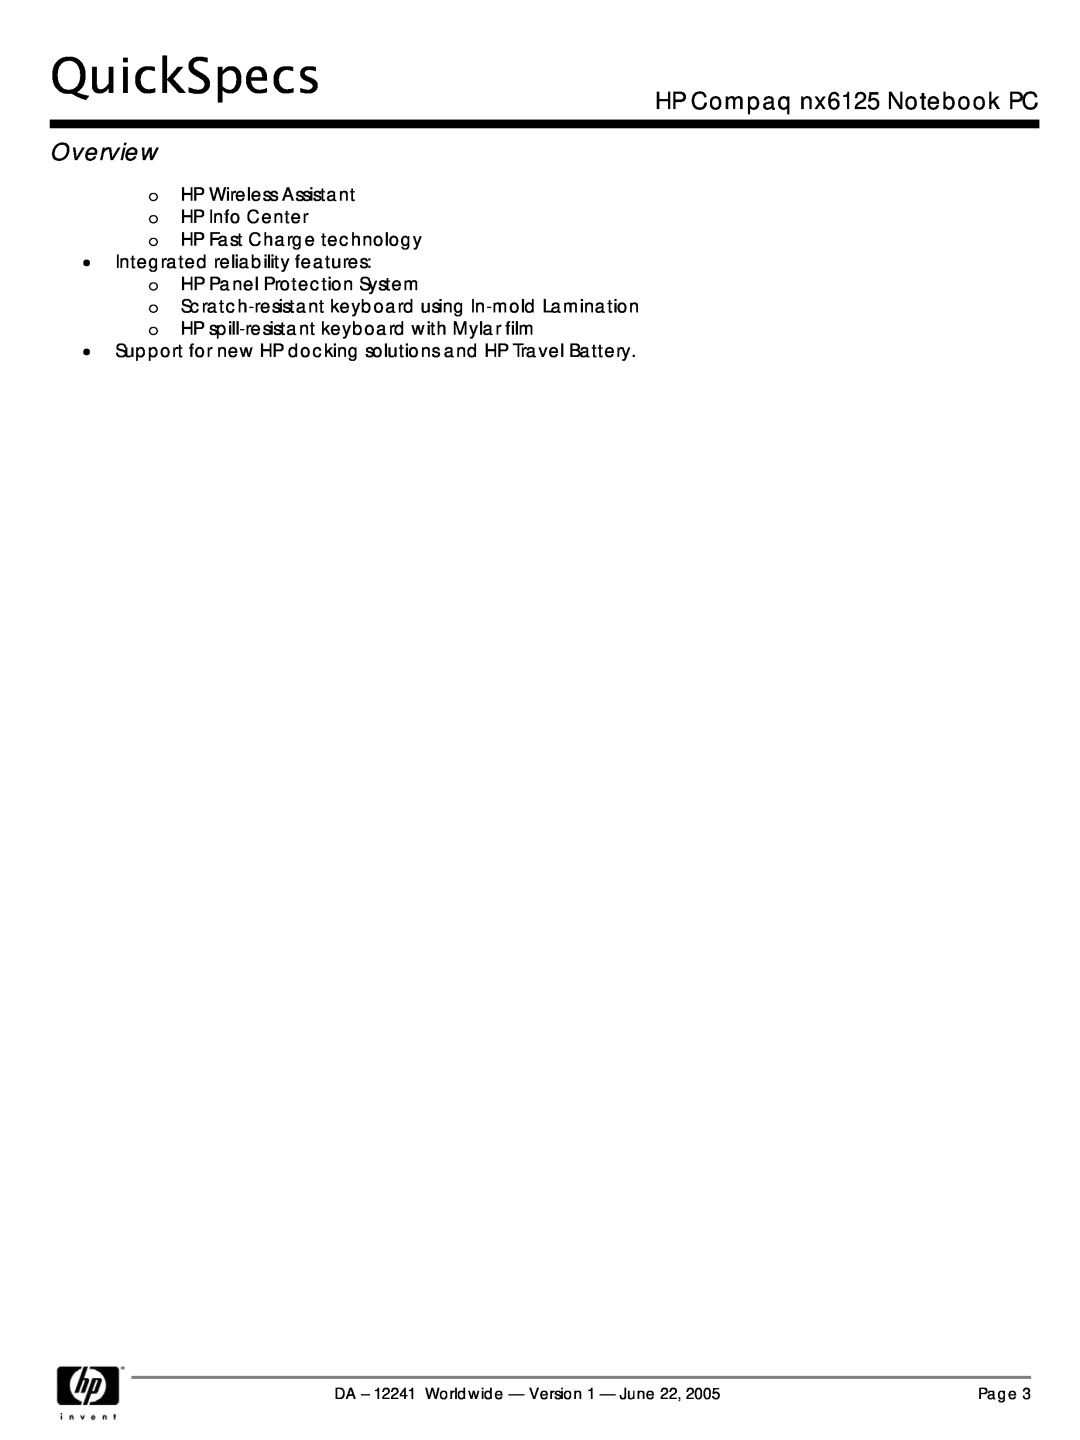 AMD manual QuickSpecs, HP Compaq nx6125 Notebook PC, Overview, DA - 12241 Worldwide - Version 1 - June 22, Page 